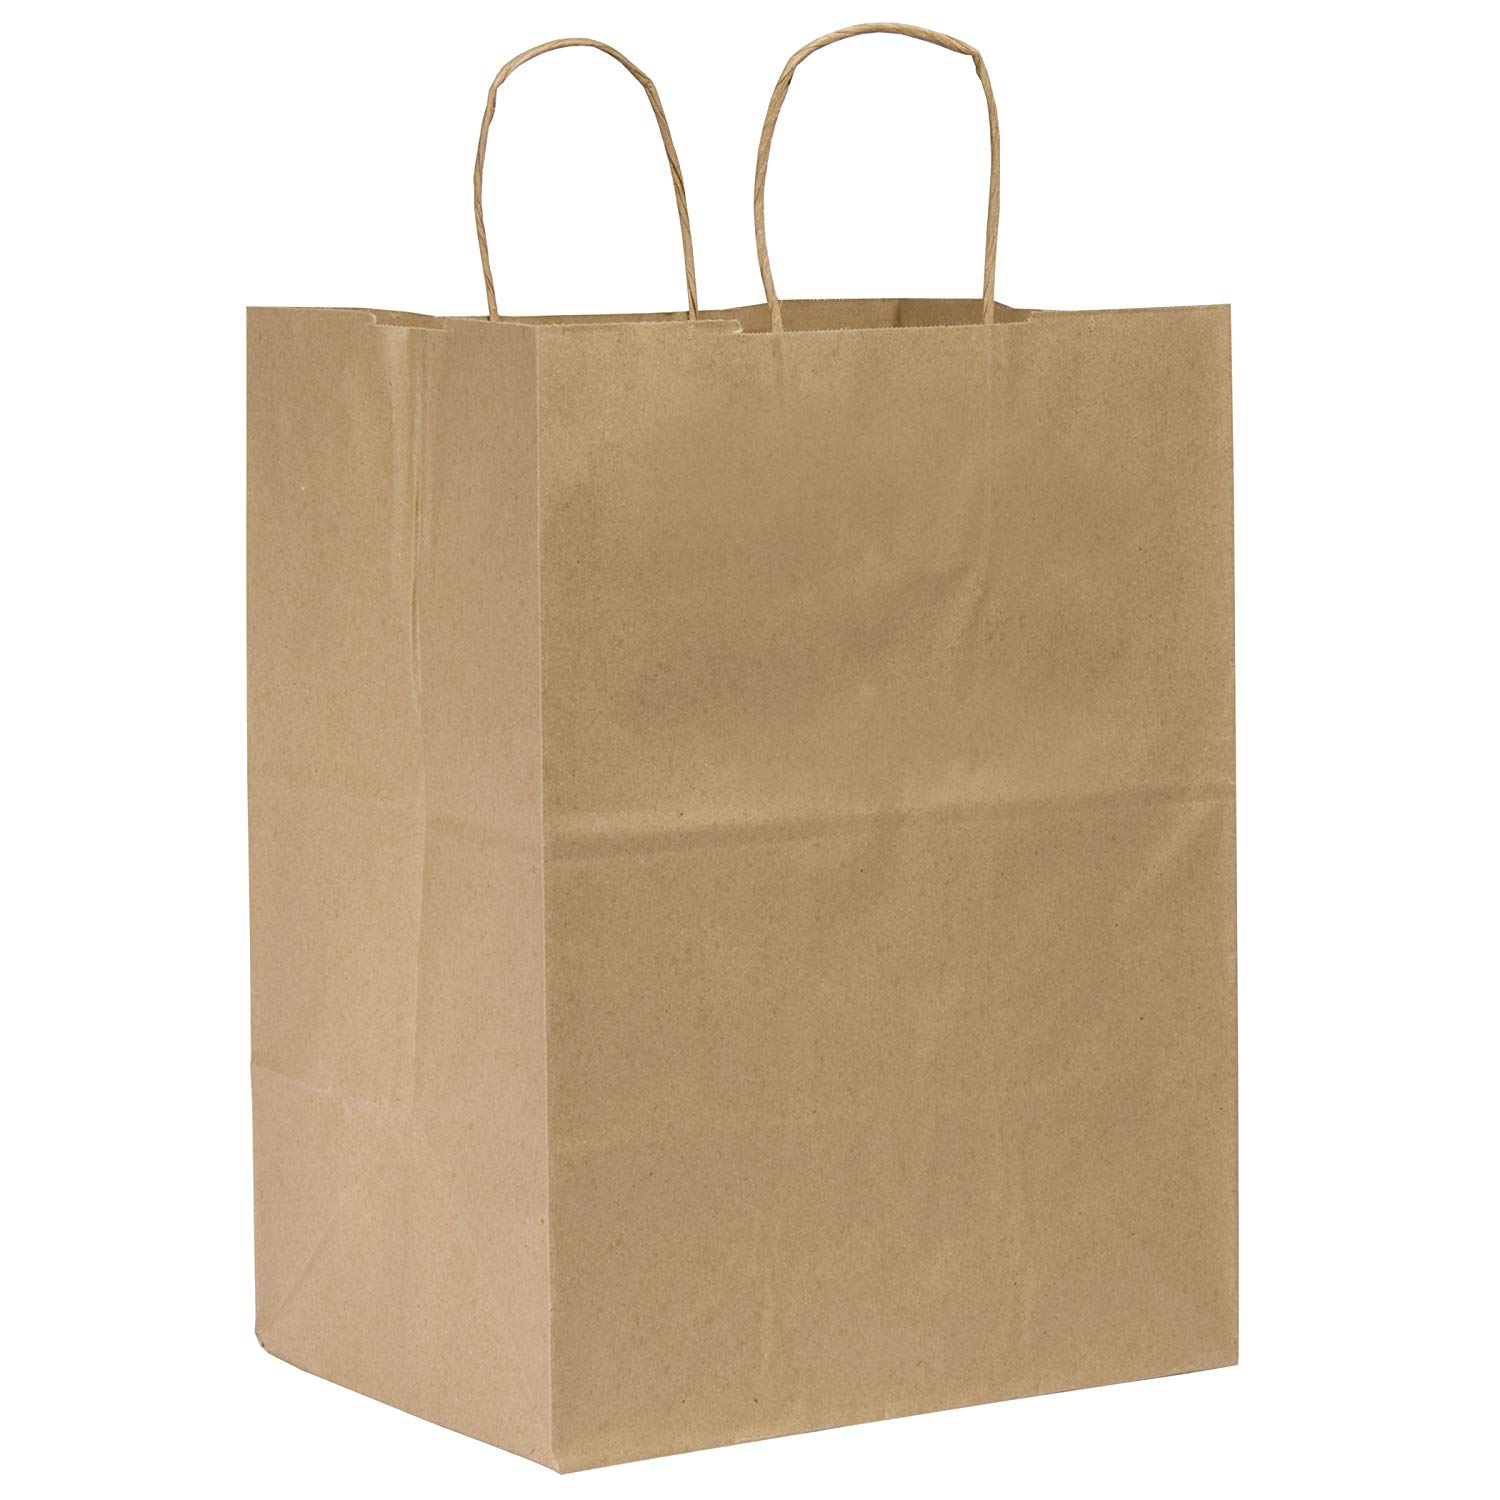 87128  Medium paper bag (65#)  With Twisted Handle  - Kraft (13x7x17) 250/case